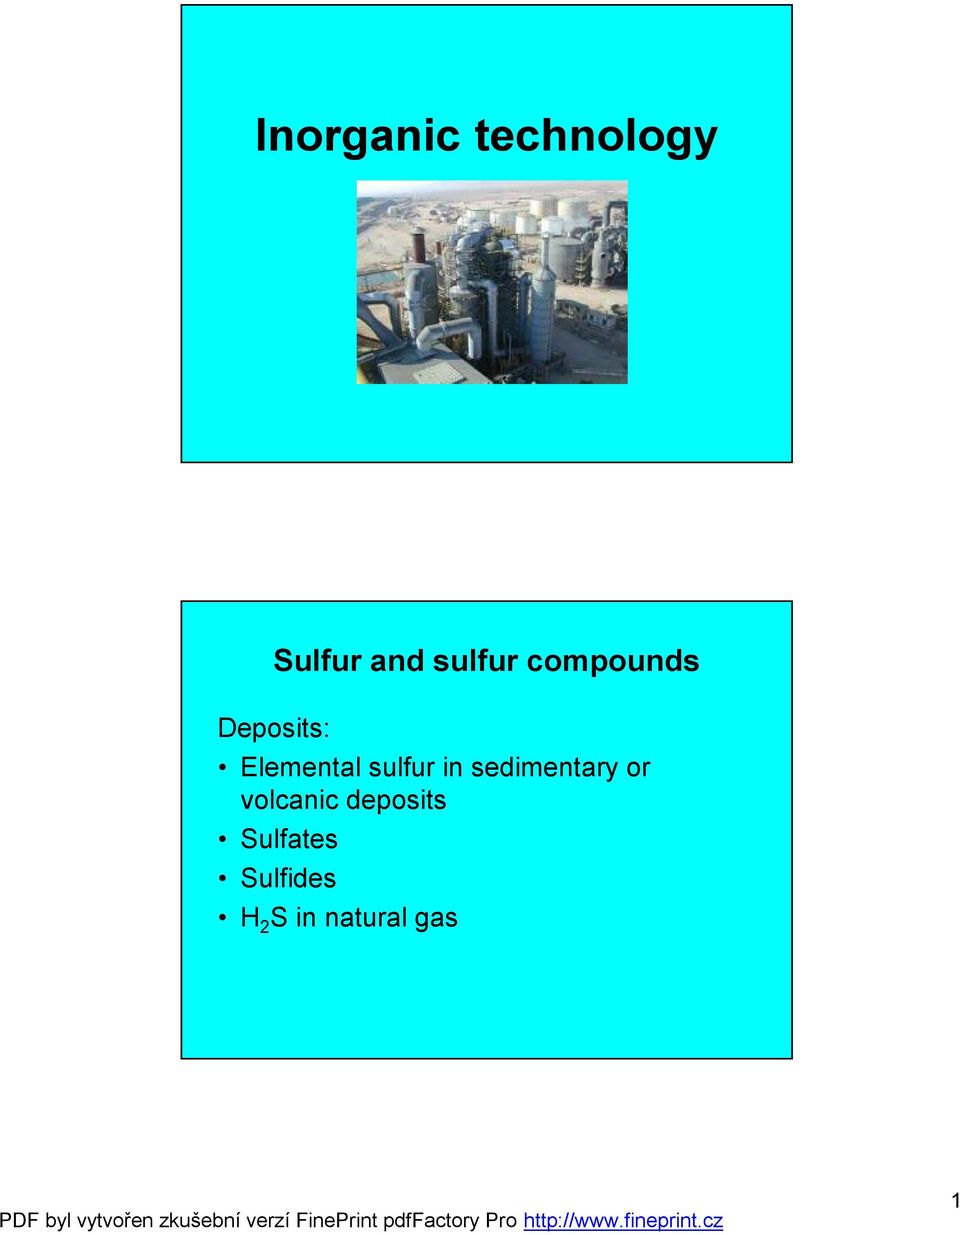 sulfur in sedimentary or volcanic